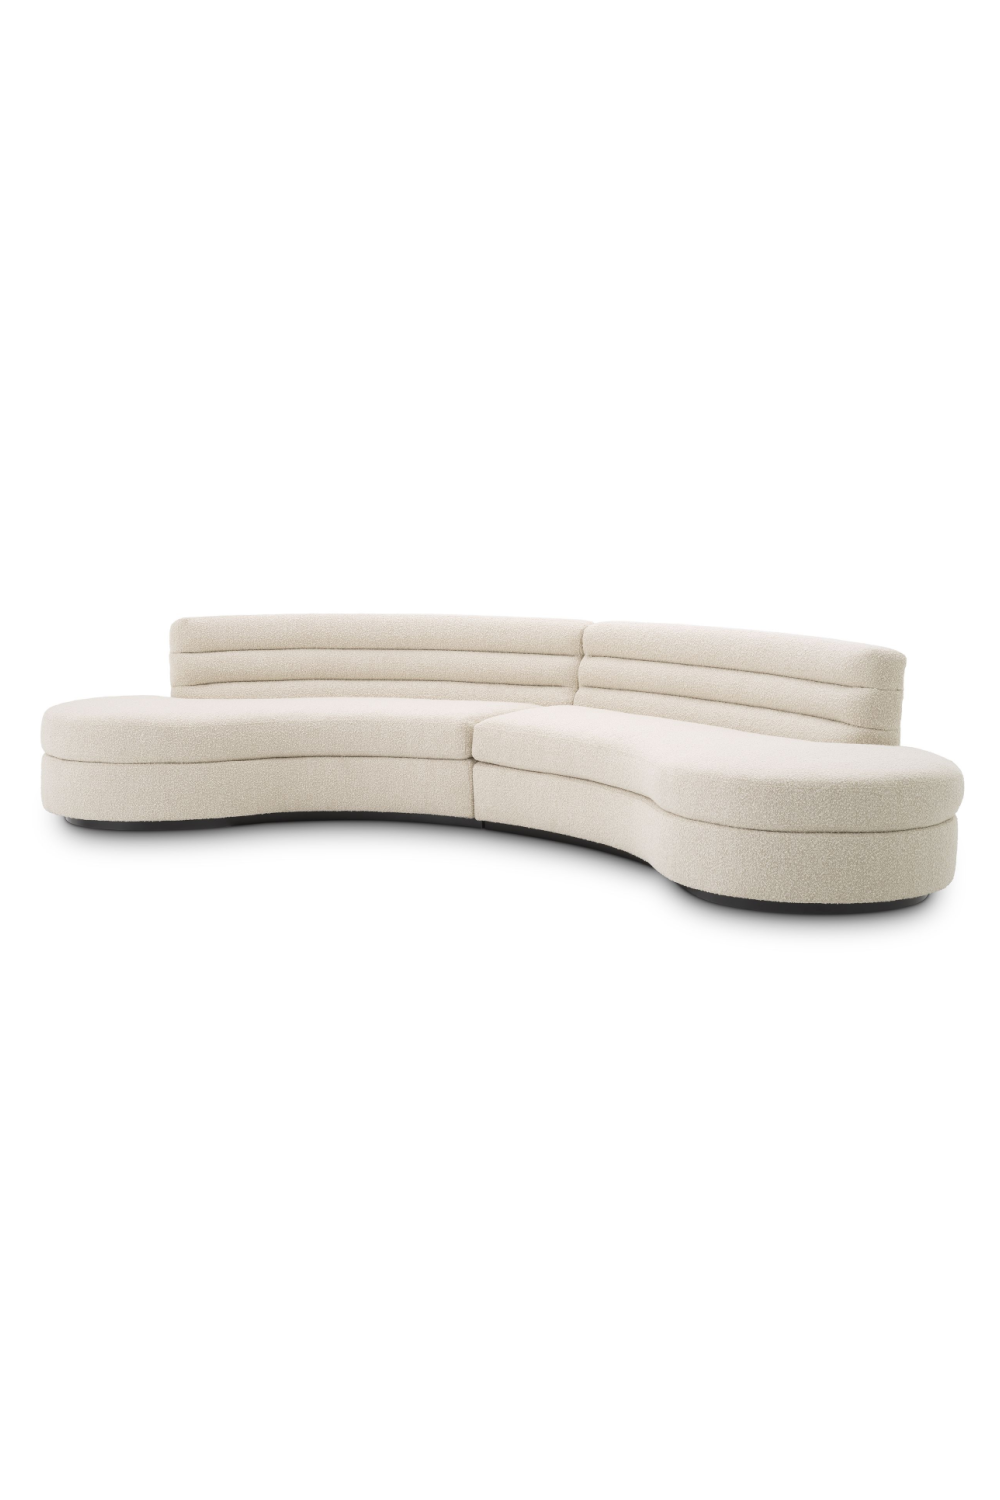 Organic-Shaped Sectional Sofa | Eichholtz Lennox | Oroa.com